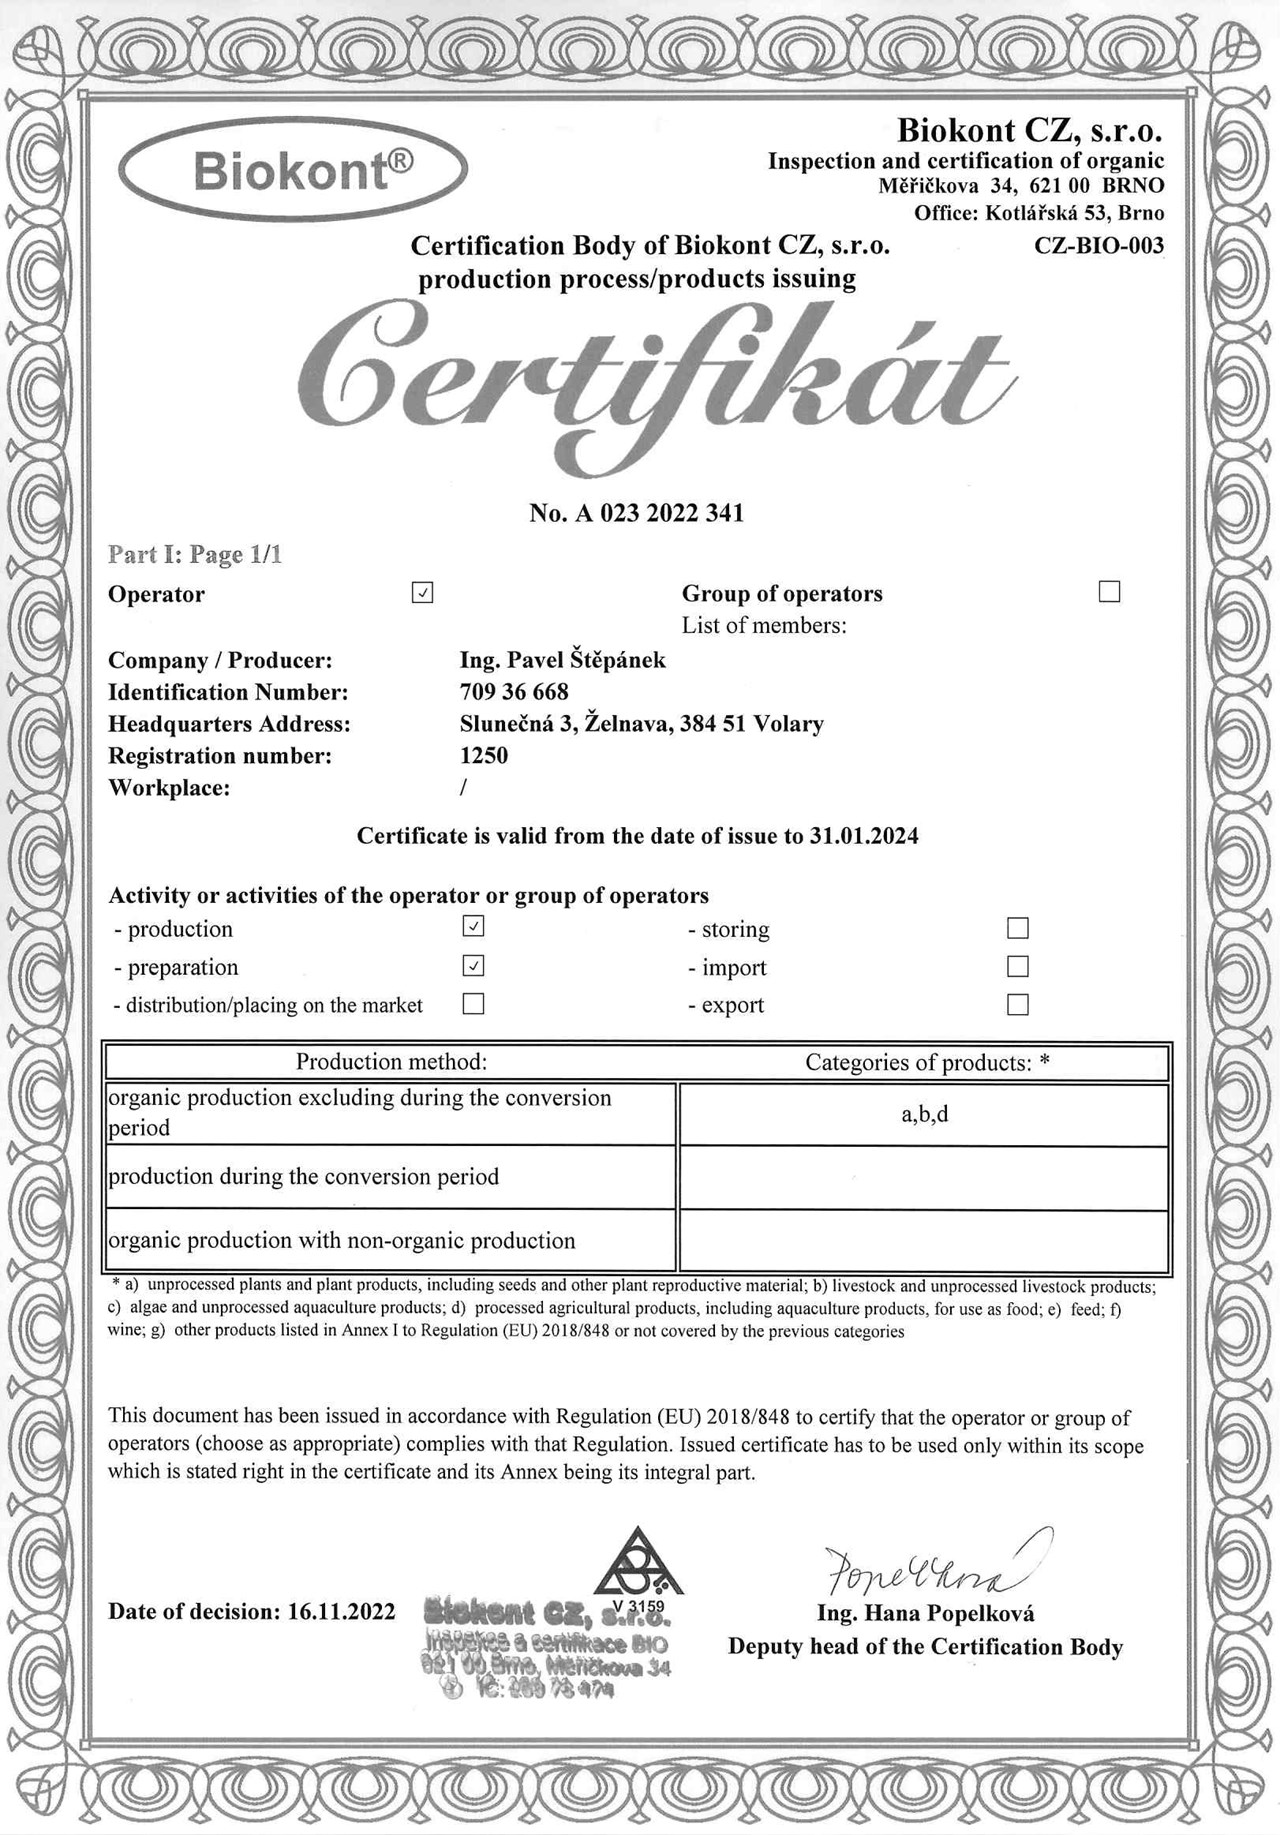 Biofarm Sonnberg Evidence certificates Biocont